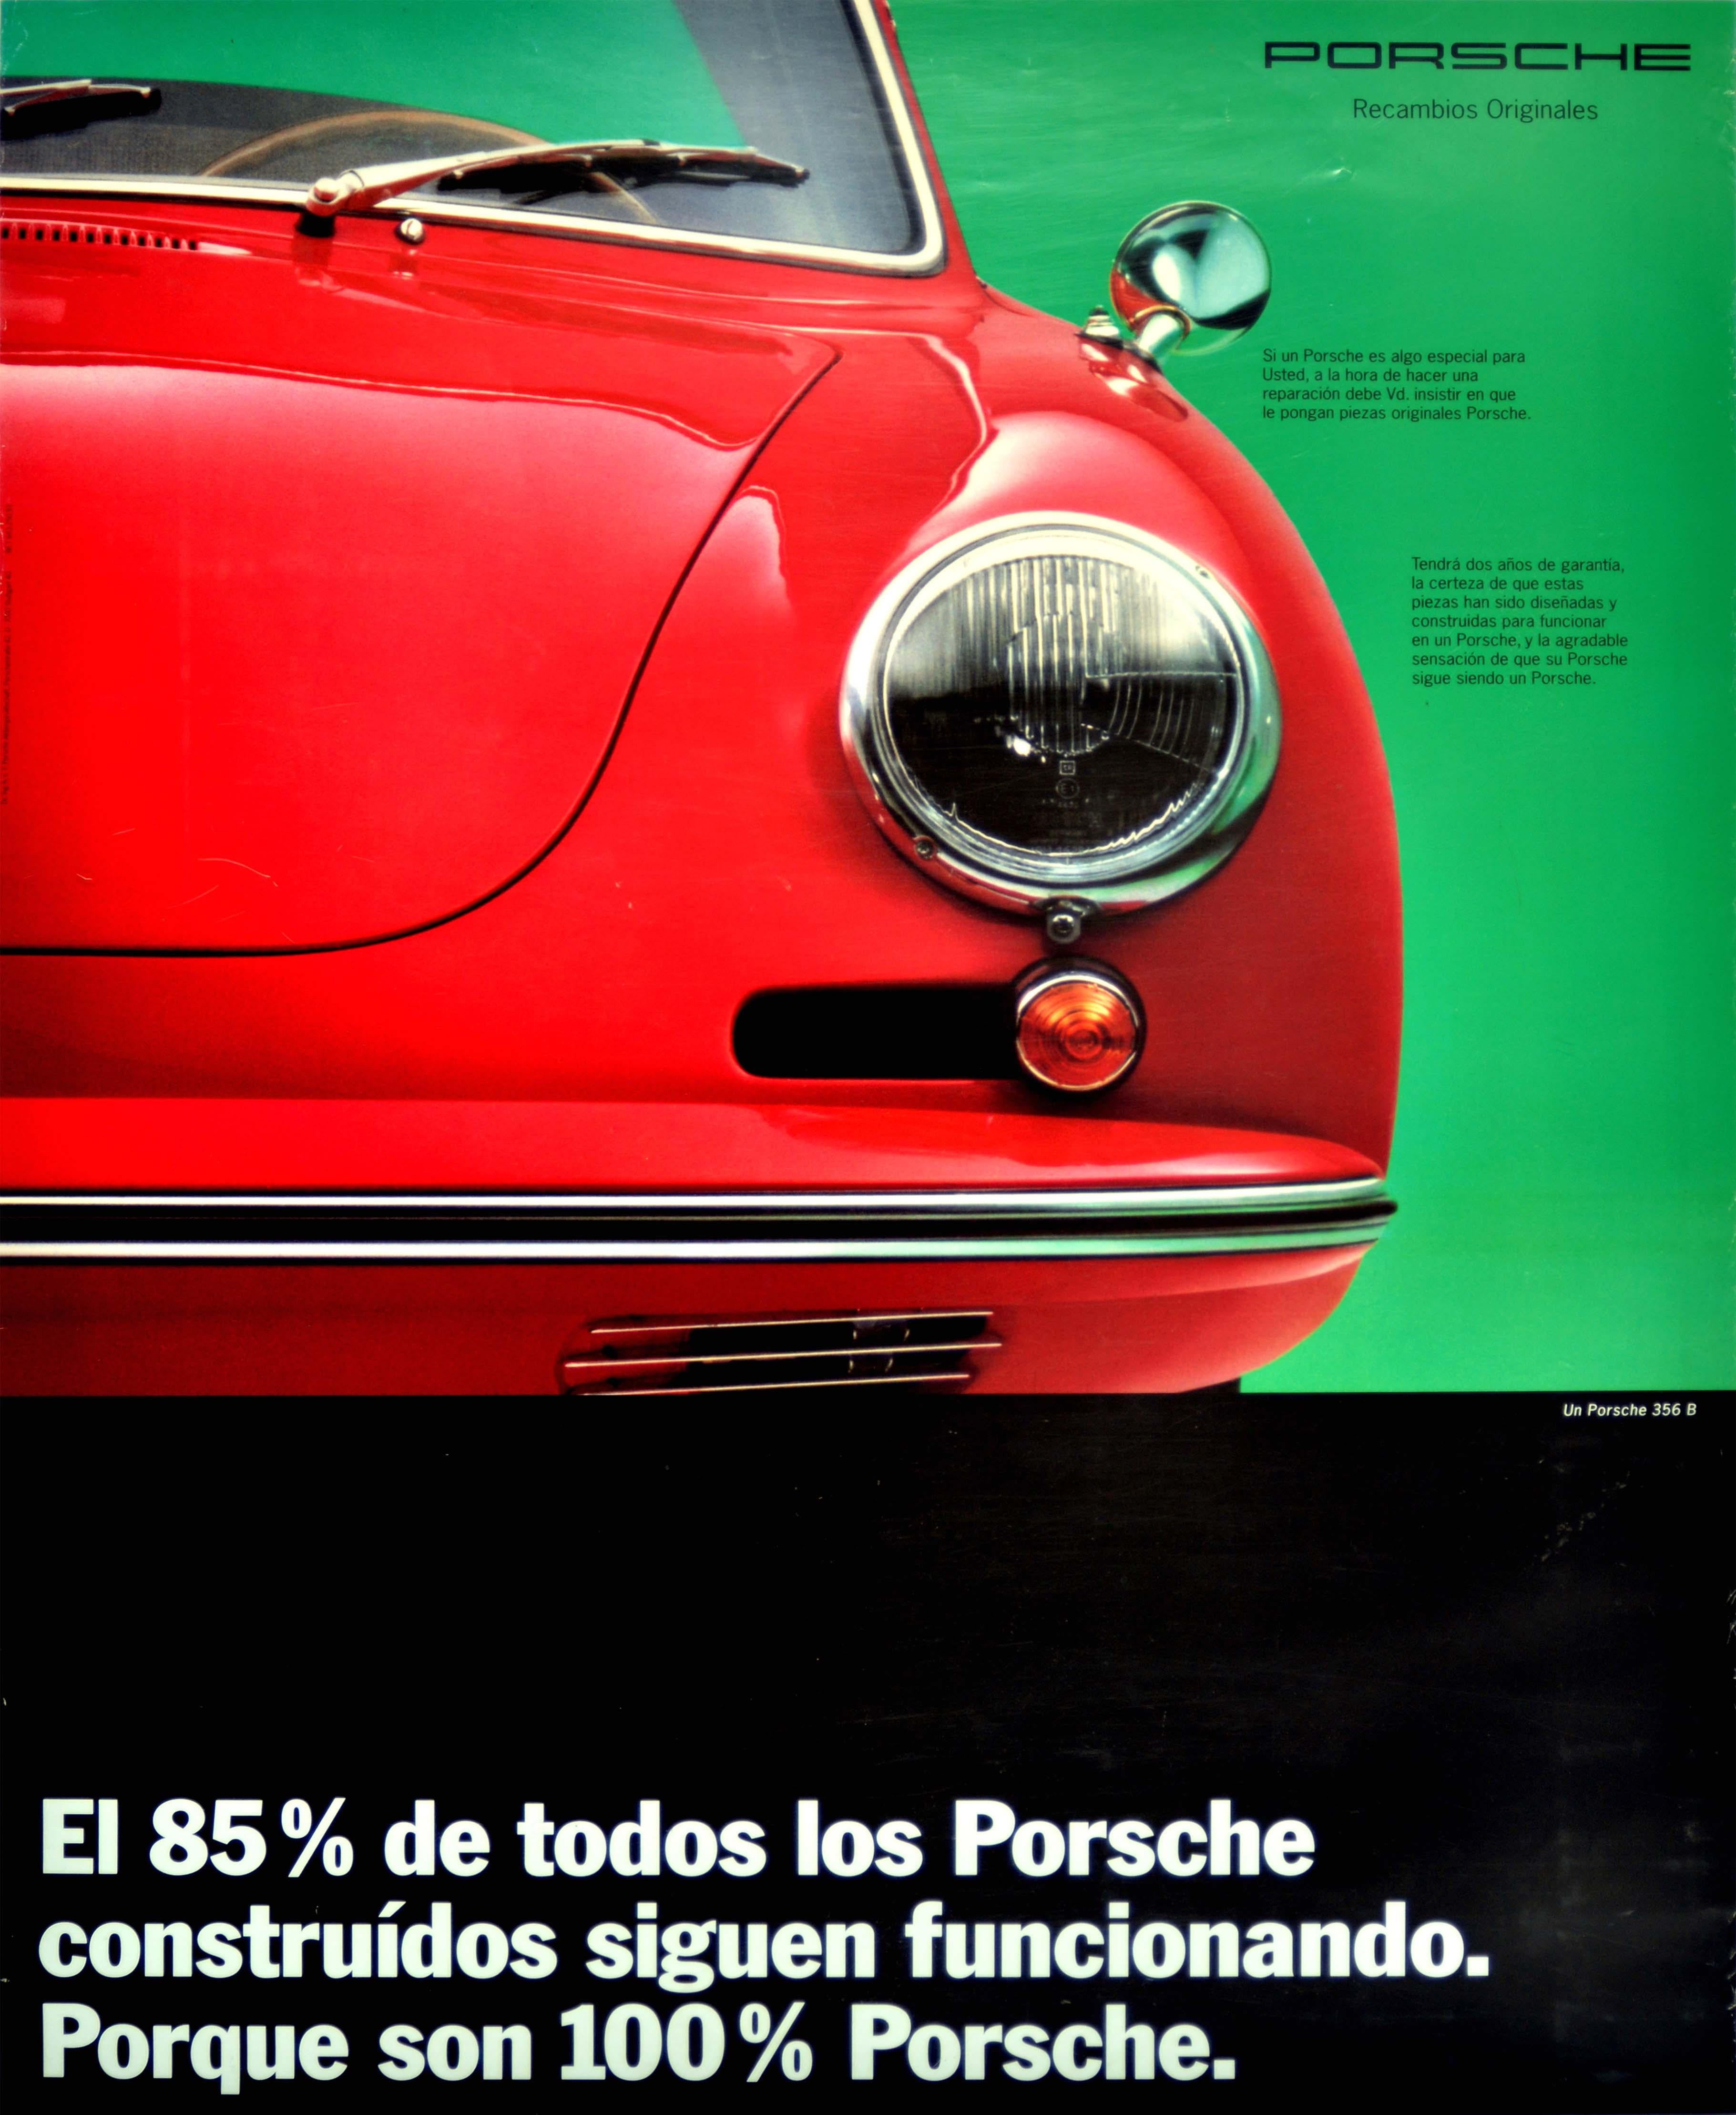 Unknown Print - Original Vintage Poster 100% Porsche 356 B Classic Sports Car Advertising Design